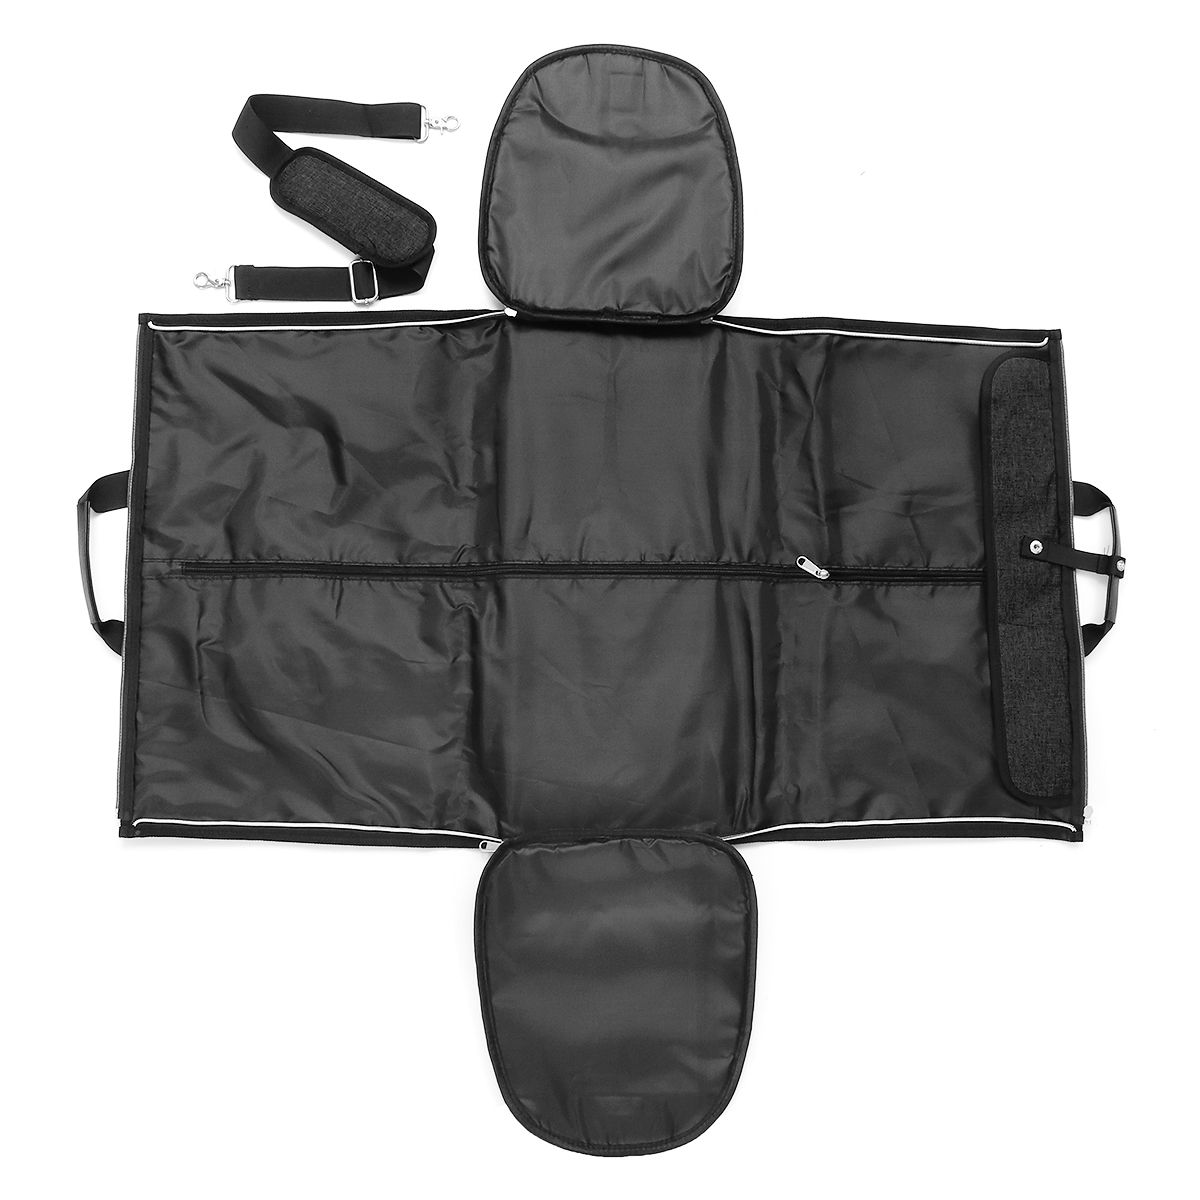 47L-Outdoor-Portable-Travel-Luggage-Bag-Suit-Dress-Garment-Storage-Handbag-Sports-Gym-Bag-1553950-6